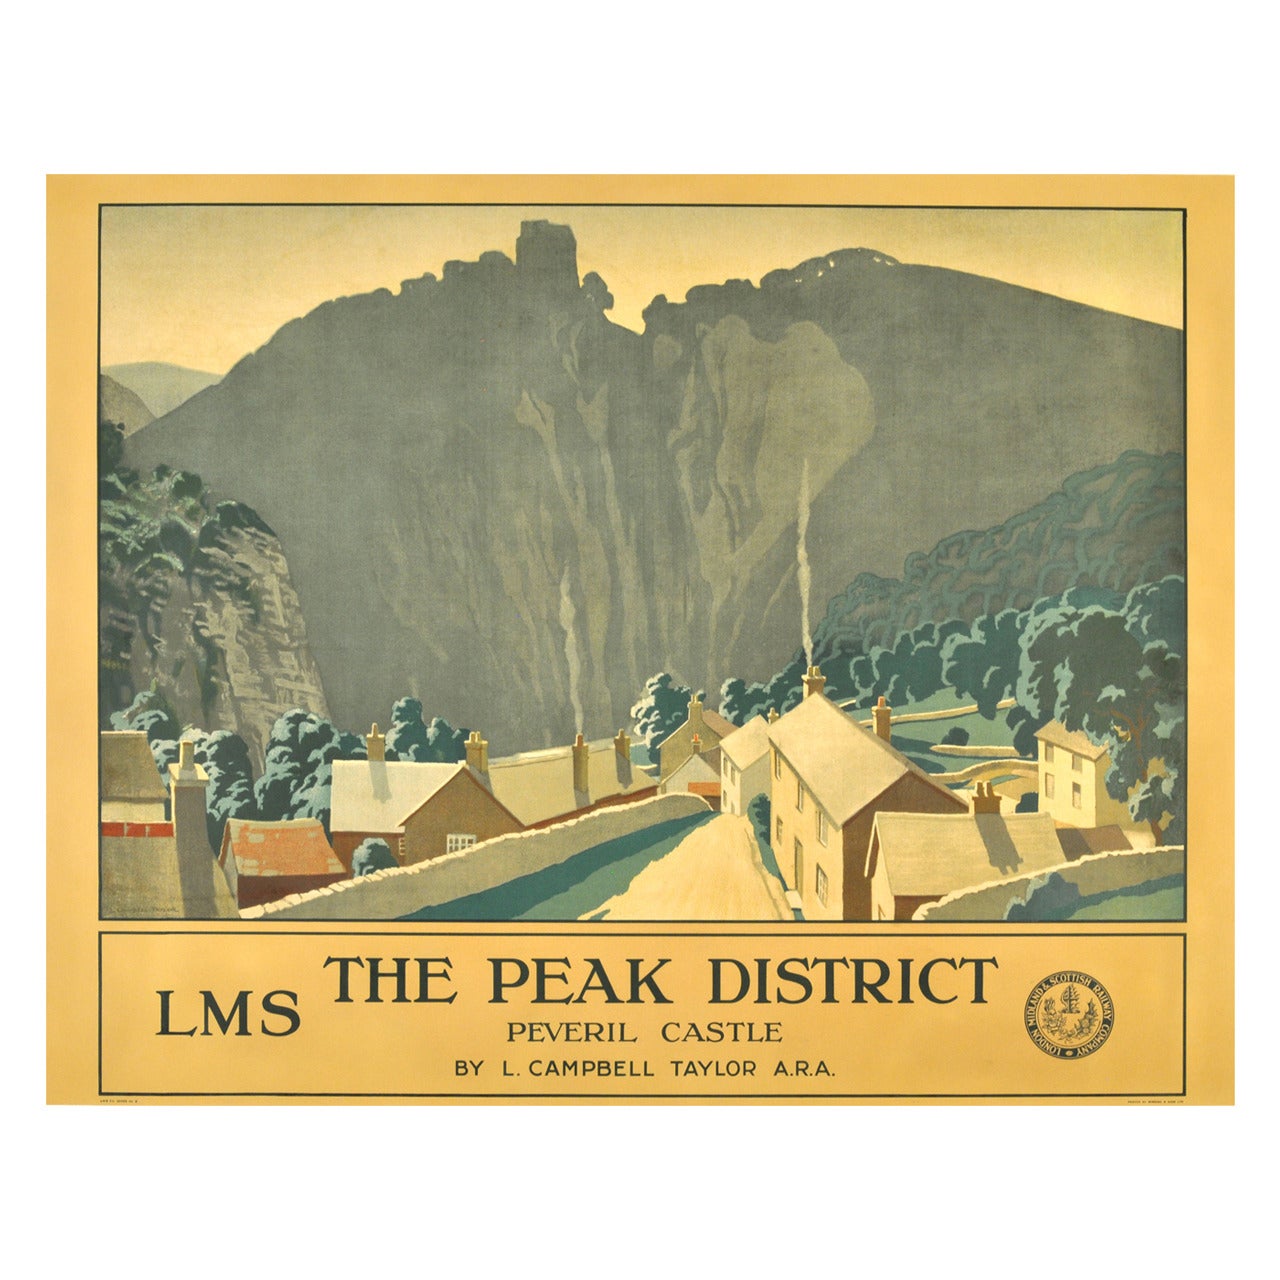 Original Vintage LMS Railway Poster “The Peak District" Featuring Peveril Castle